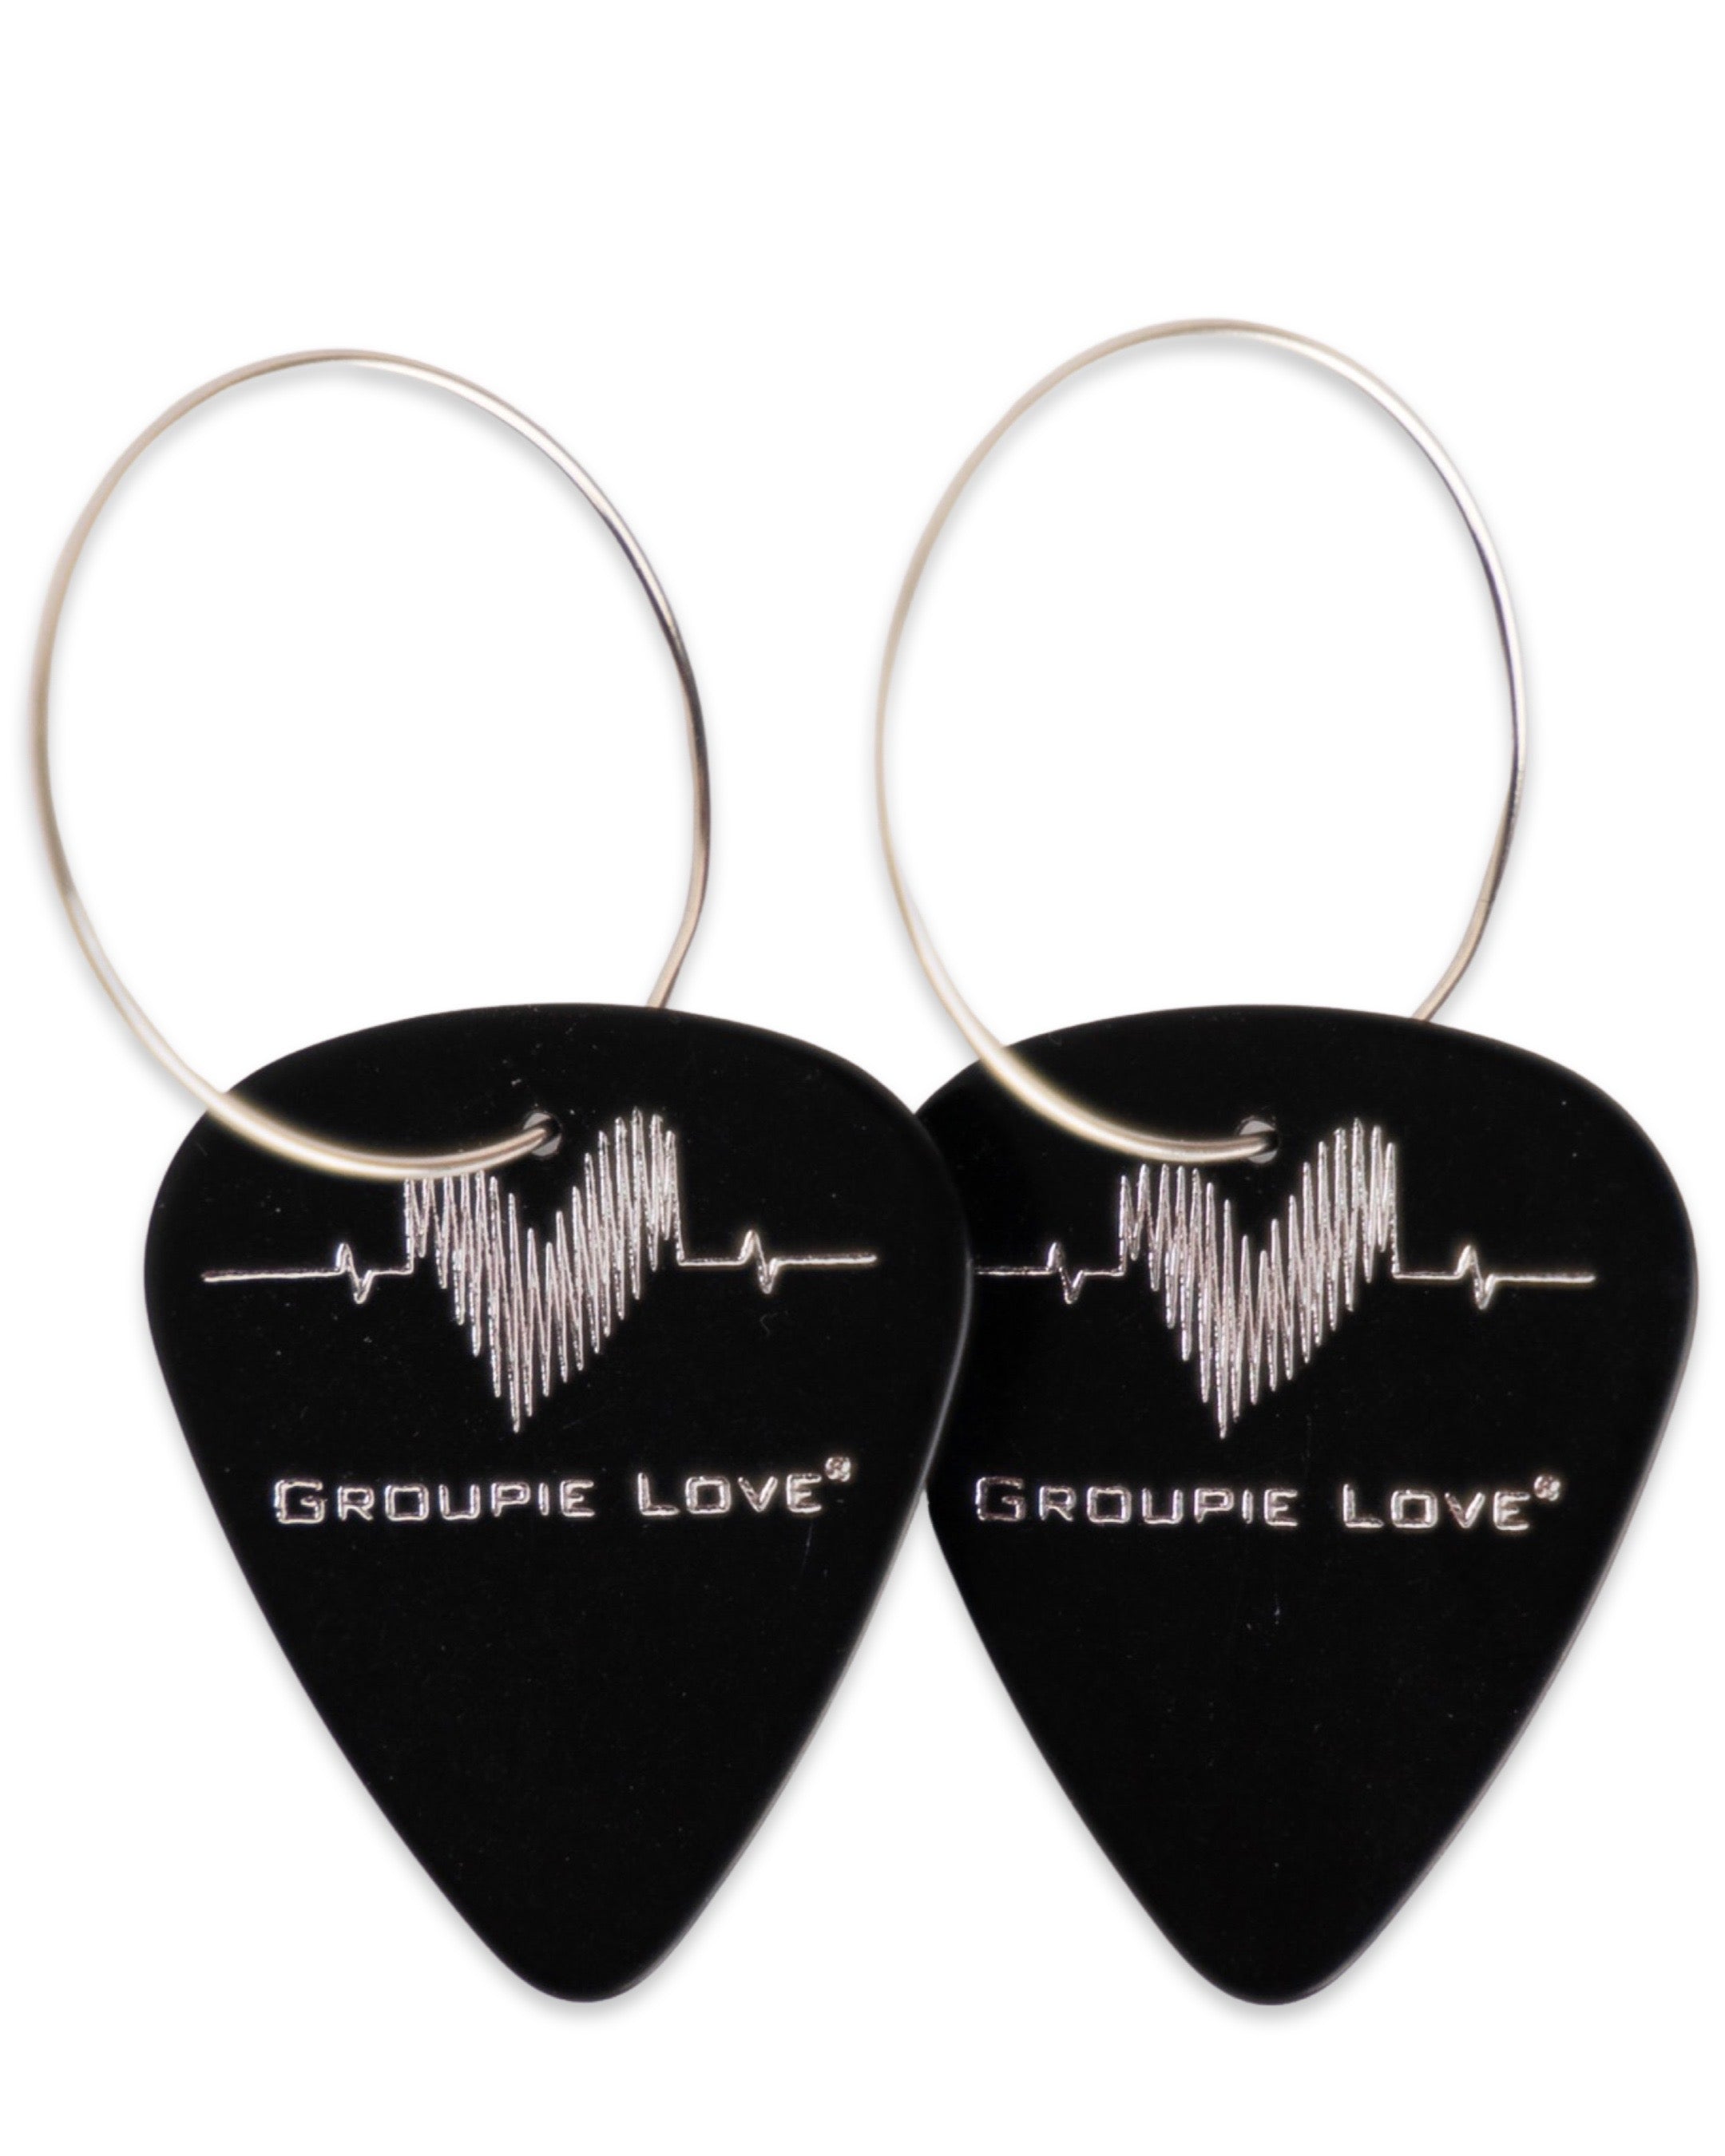 Groupie Love Black Silver Single Guitar Pick Earrings